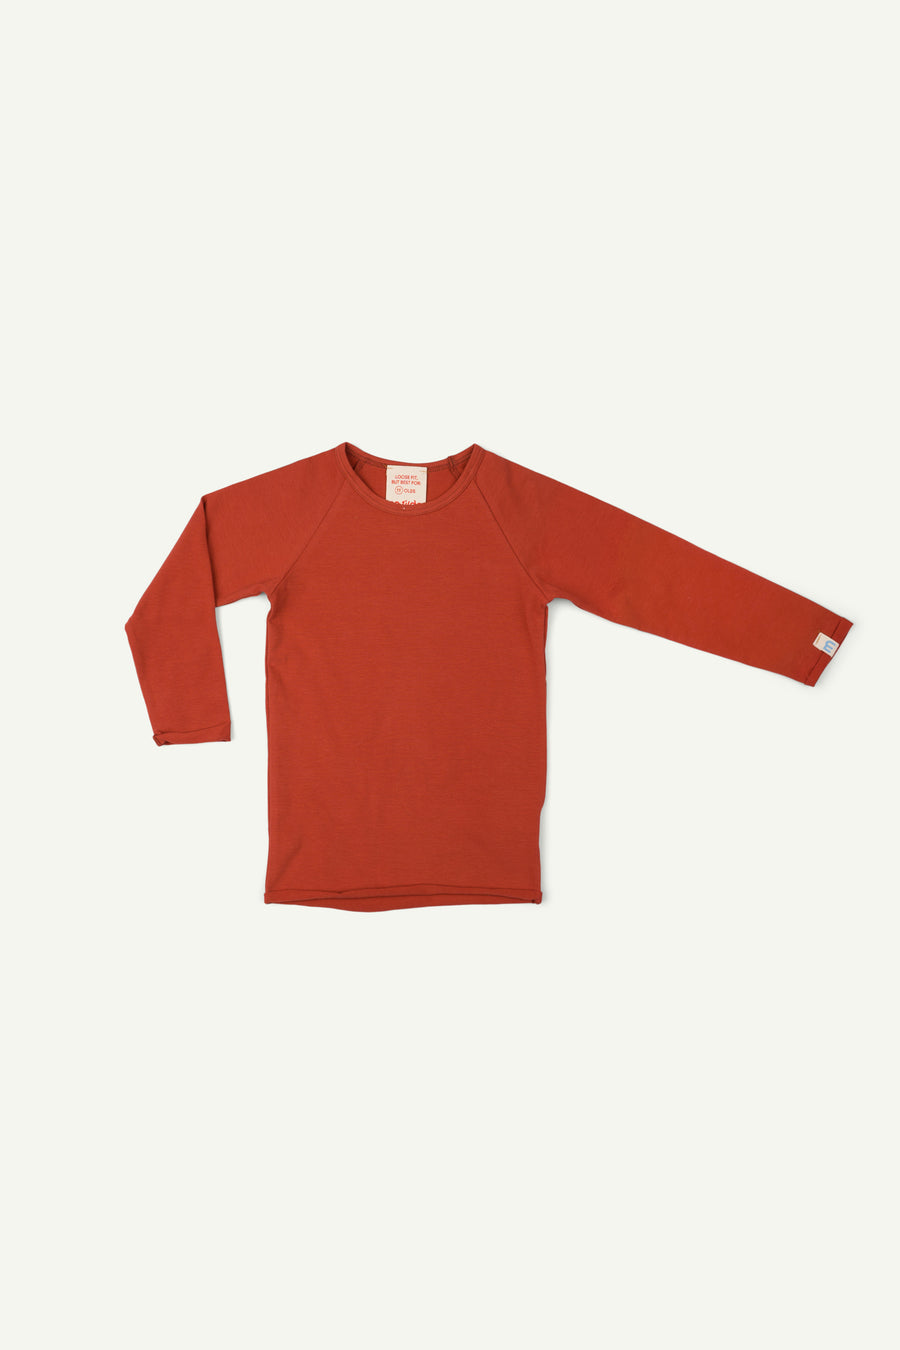 Red Sweatshirt, sand